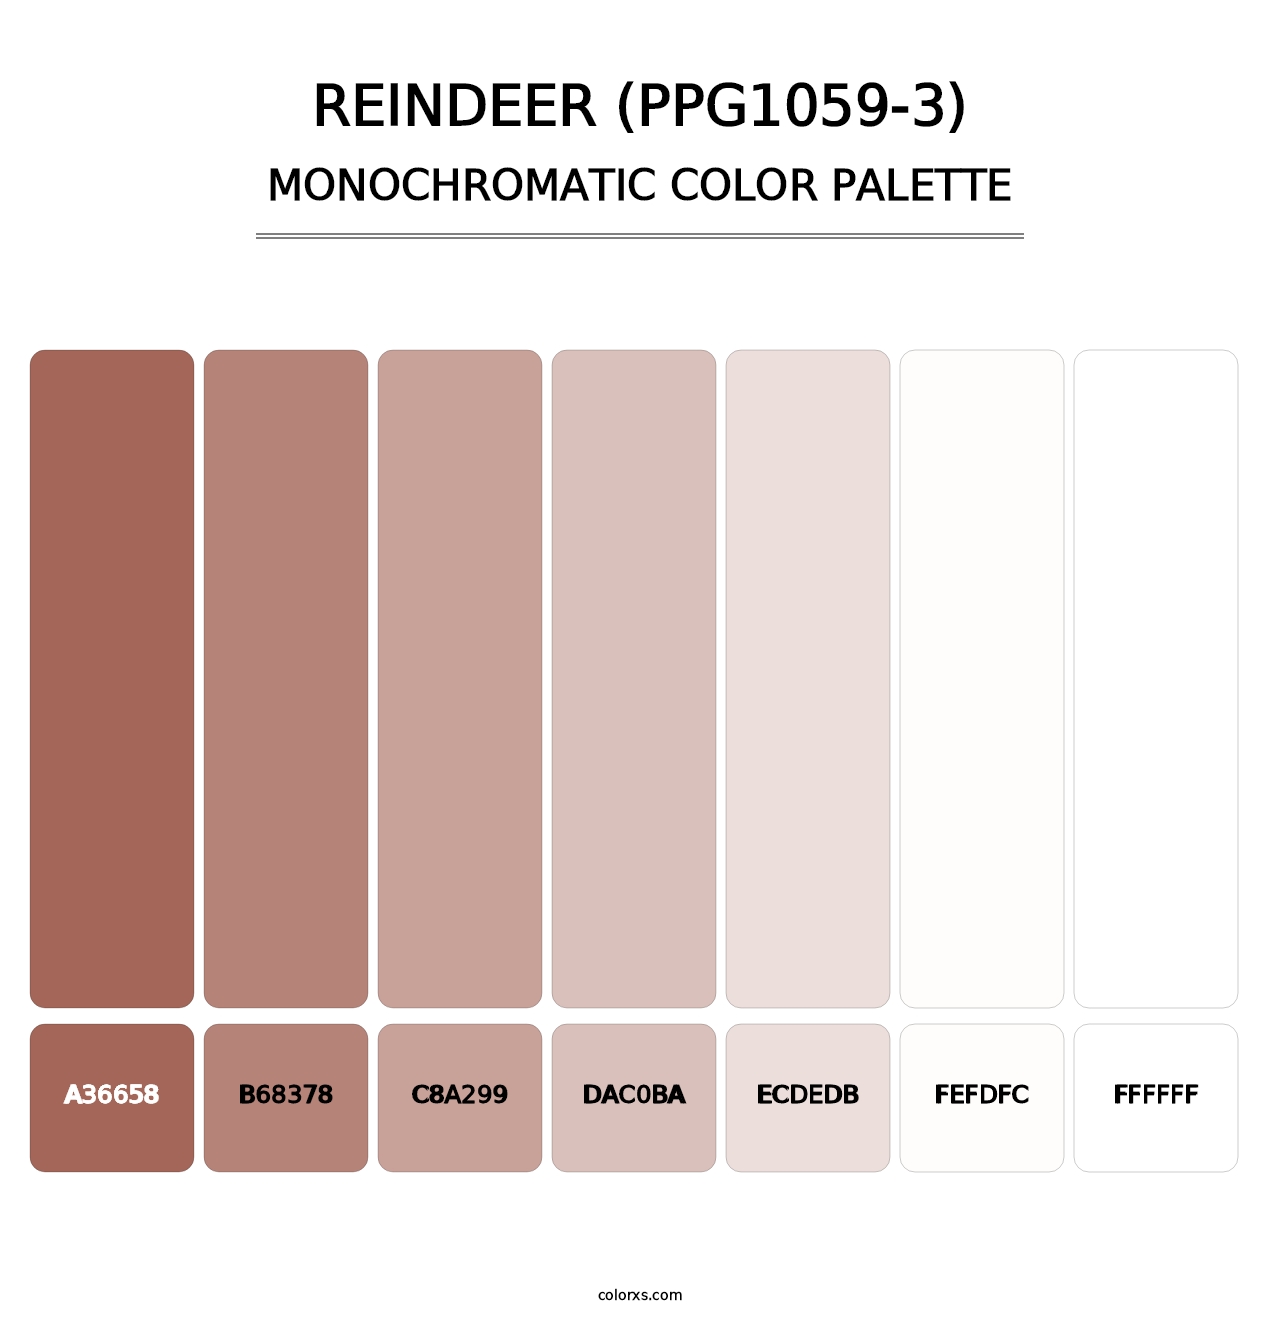 Reindeer (PPG1059-3) - Monochromatic Color Palette